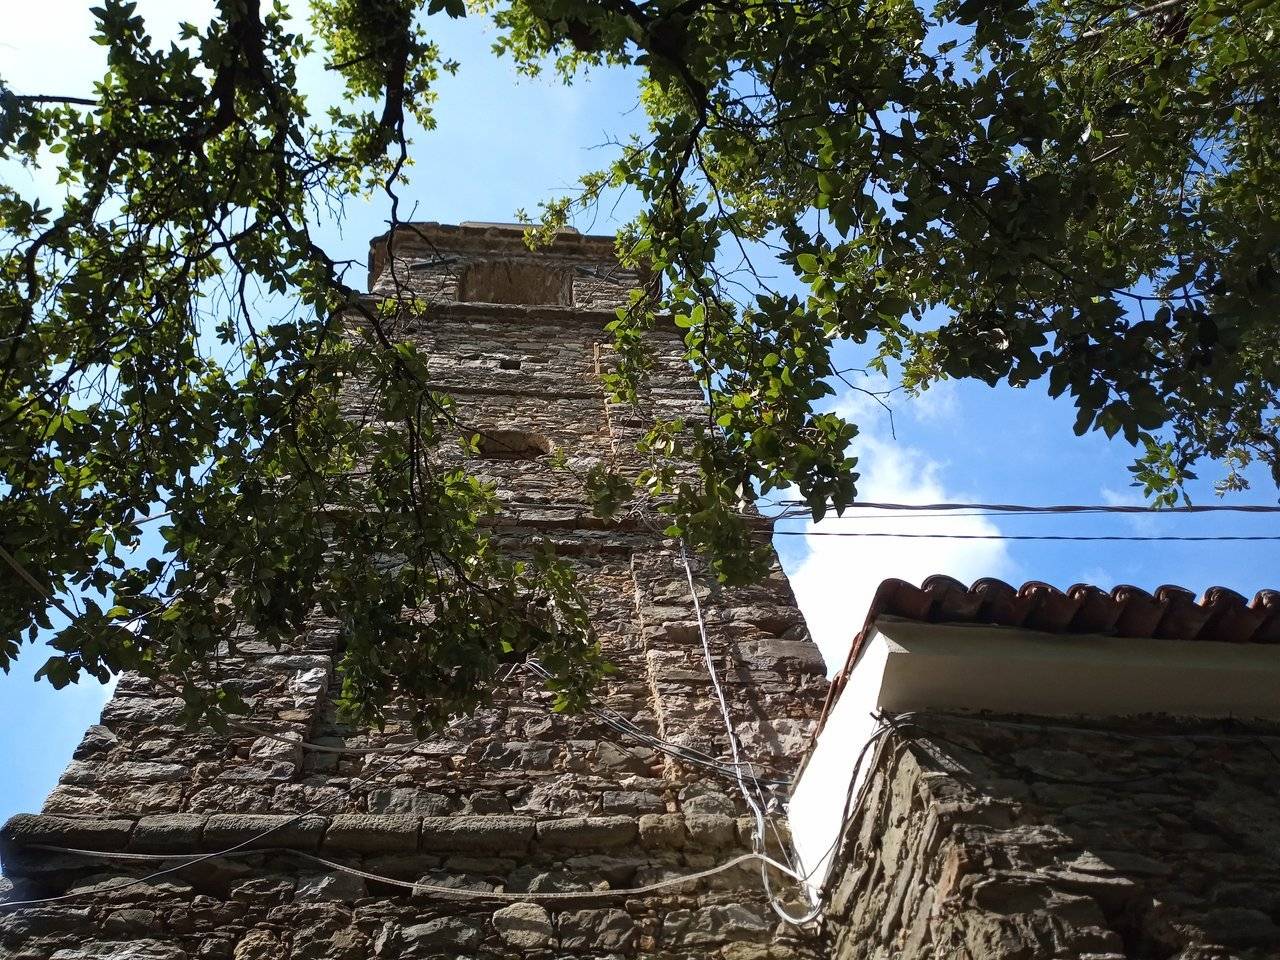 Bel tower of the Carignano church